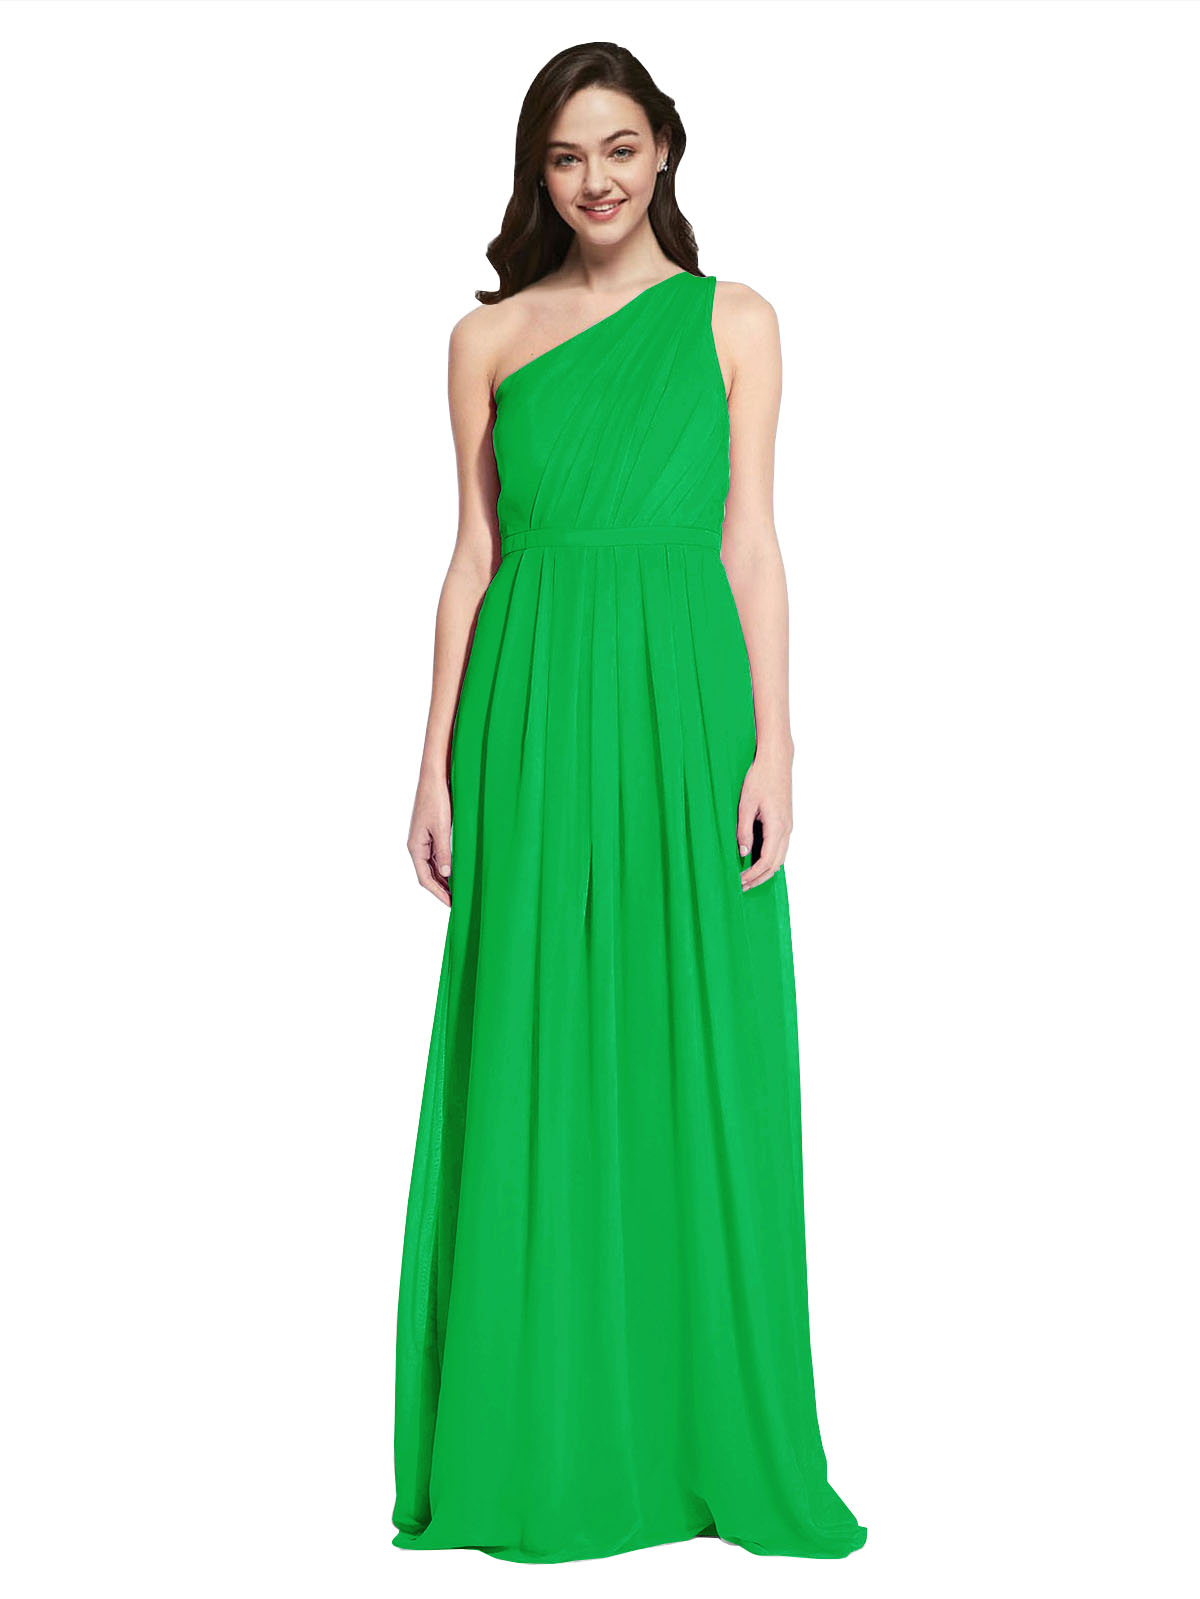 Long A-Line One Shoulder Sleeveless Green Chiffon Bridesmaid Dress Orlando